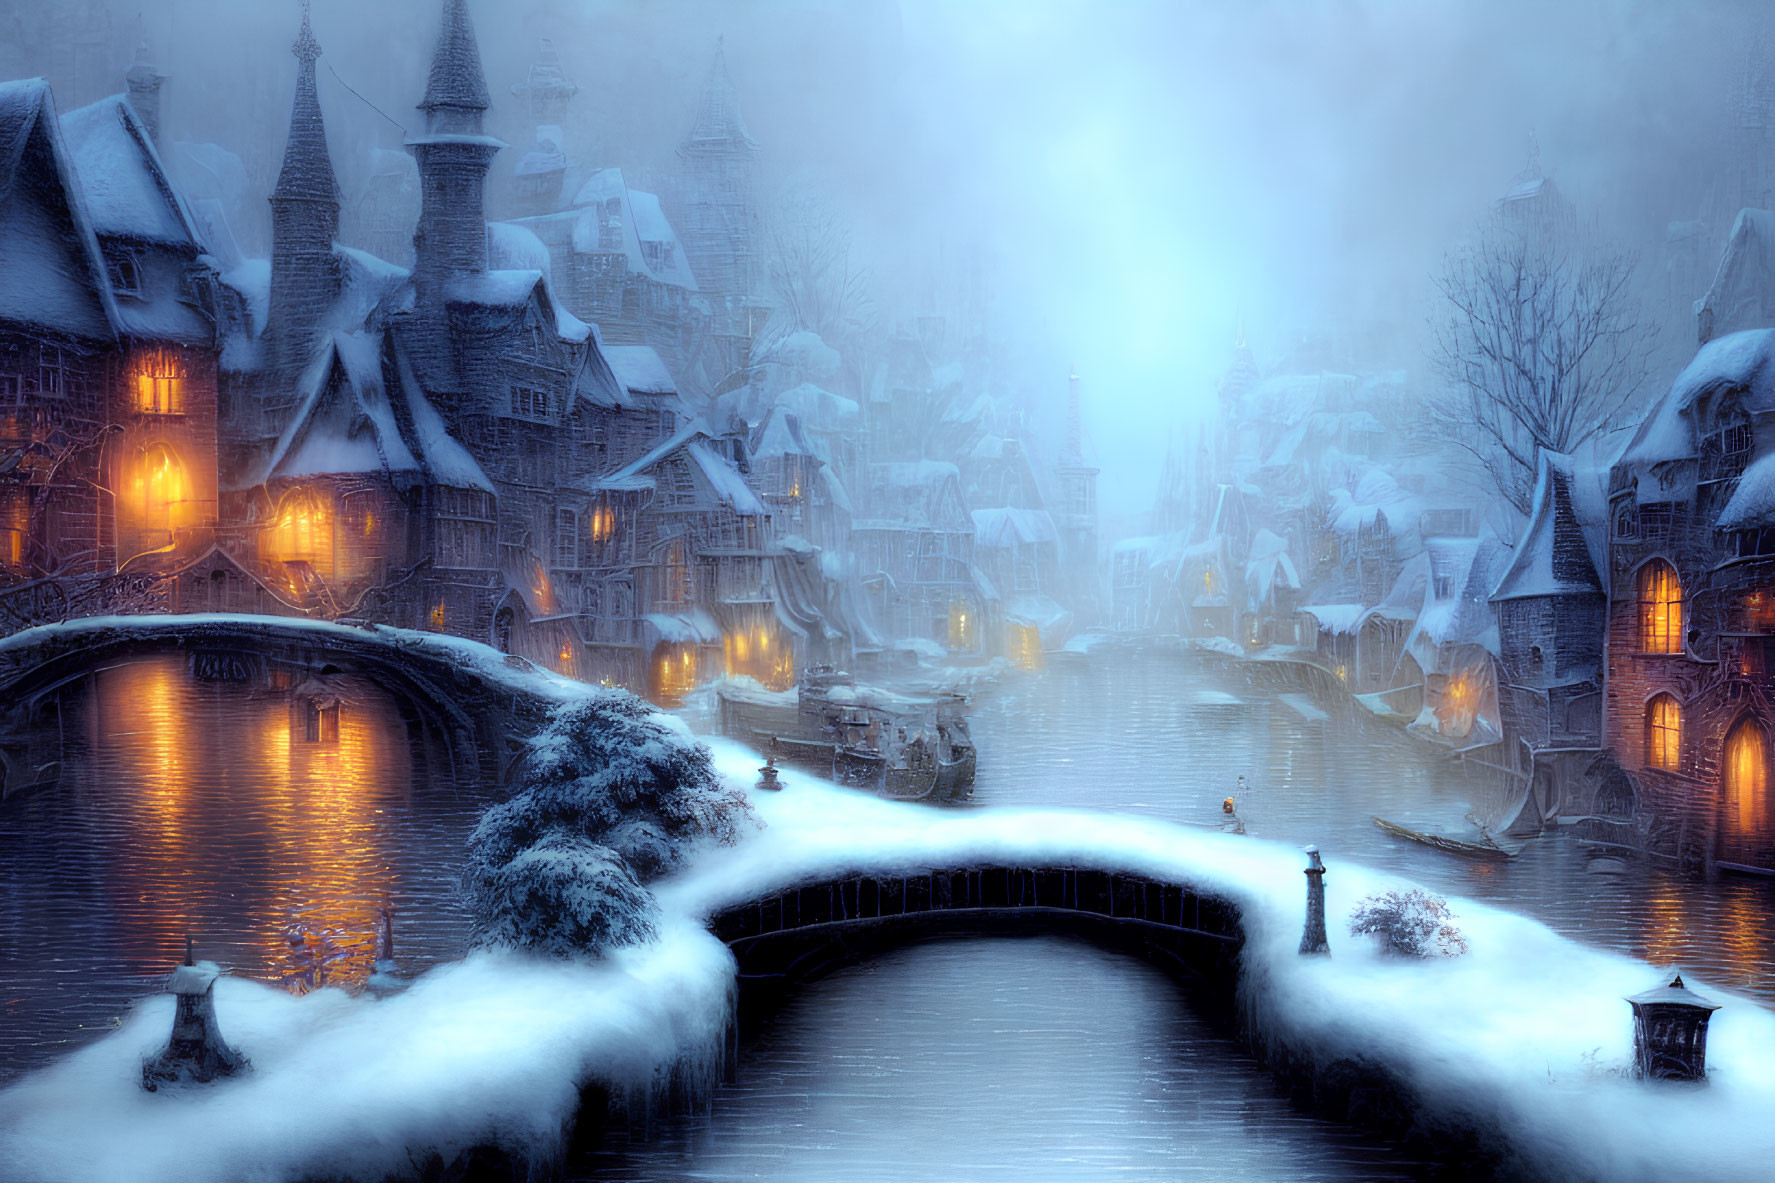 Snowy Fantasy Village with Stone Bridge and Mystical Glow